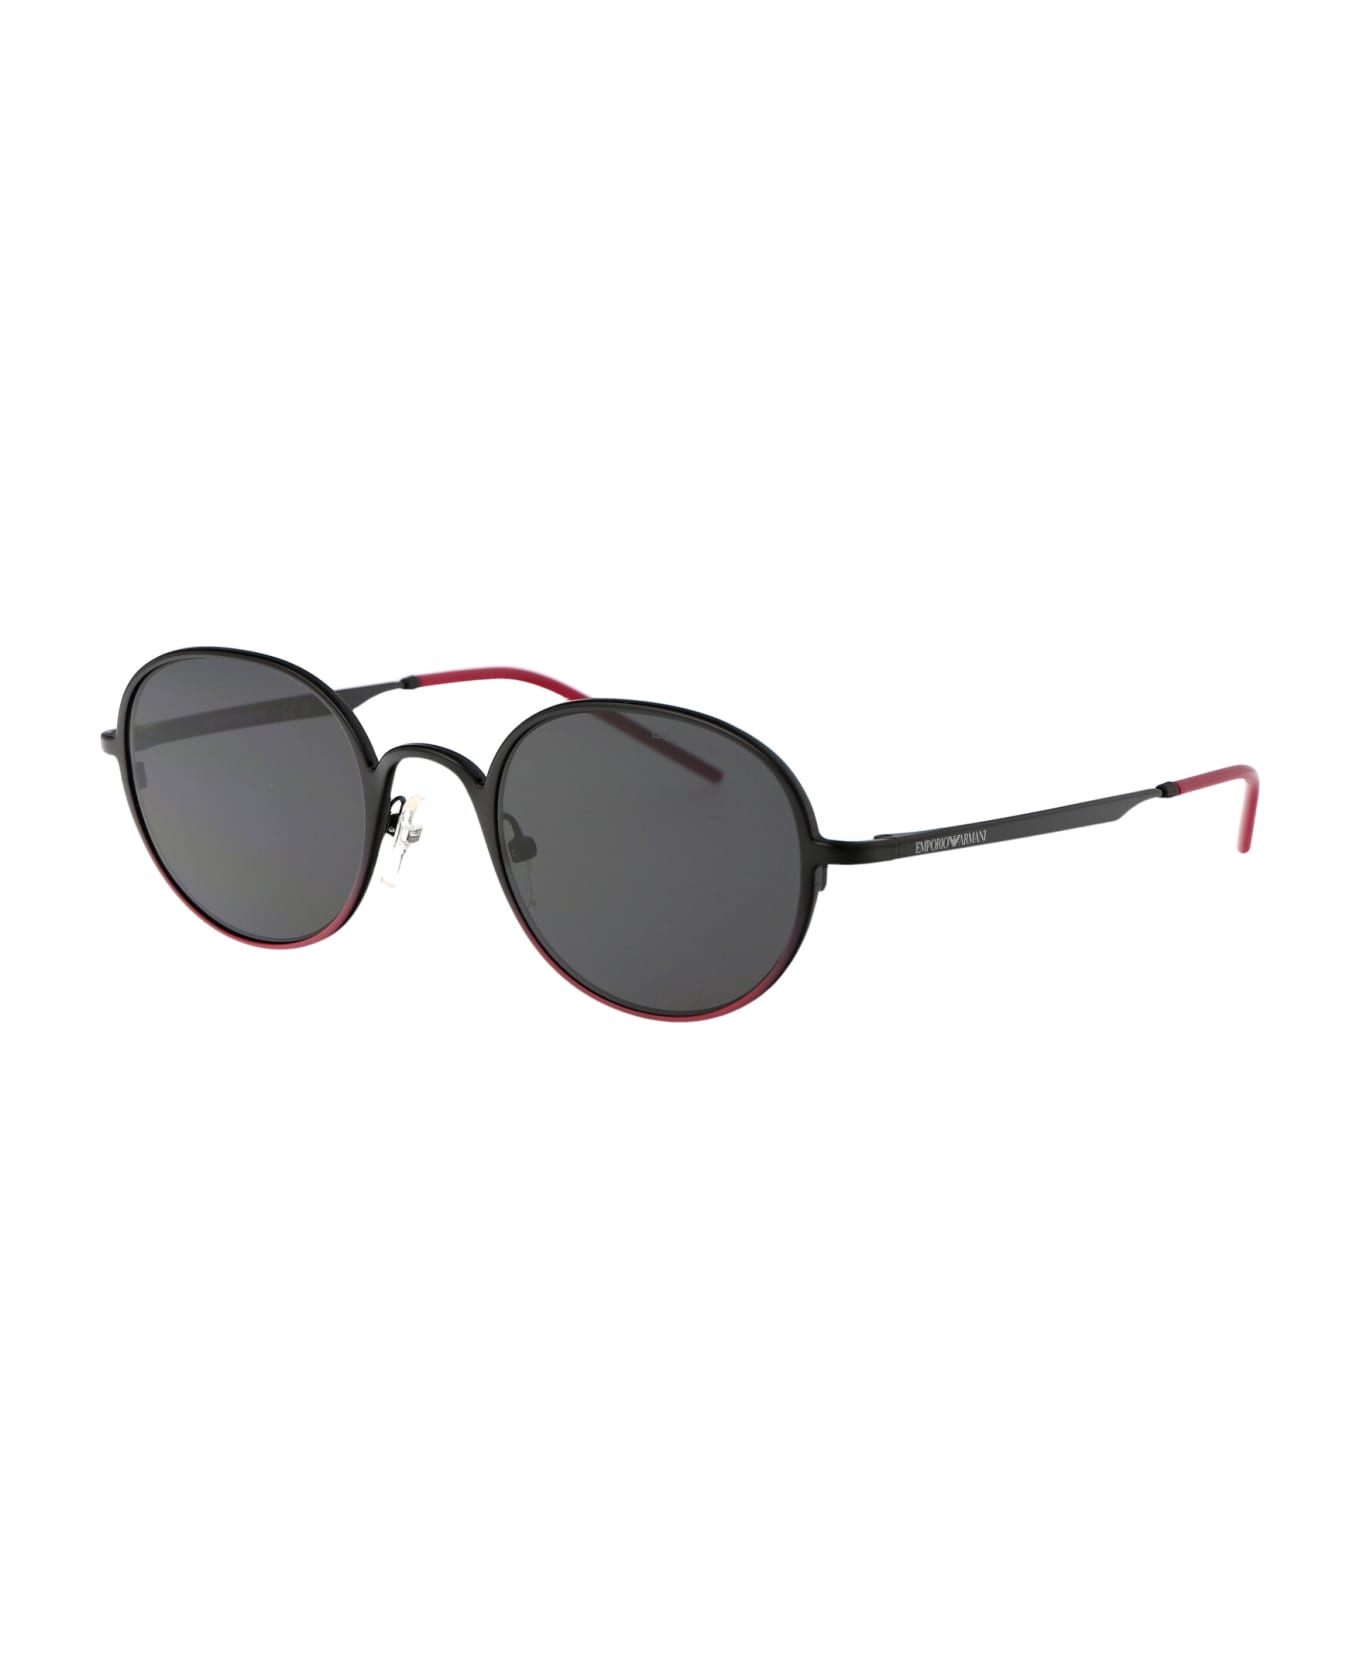 Emporio Armani 0ea2151 Sunglasses - 337487 Shiny Black/Fuchsia Dark Grey サングラス